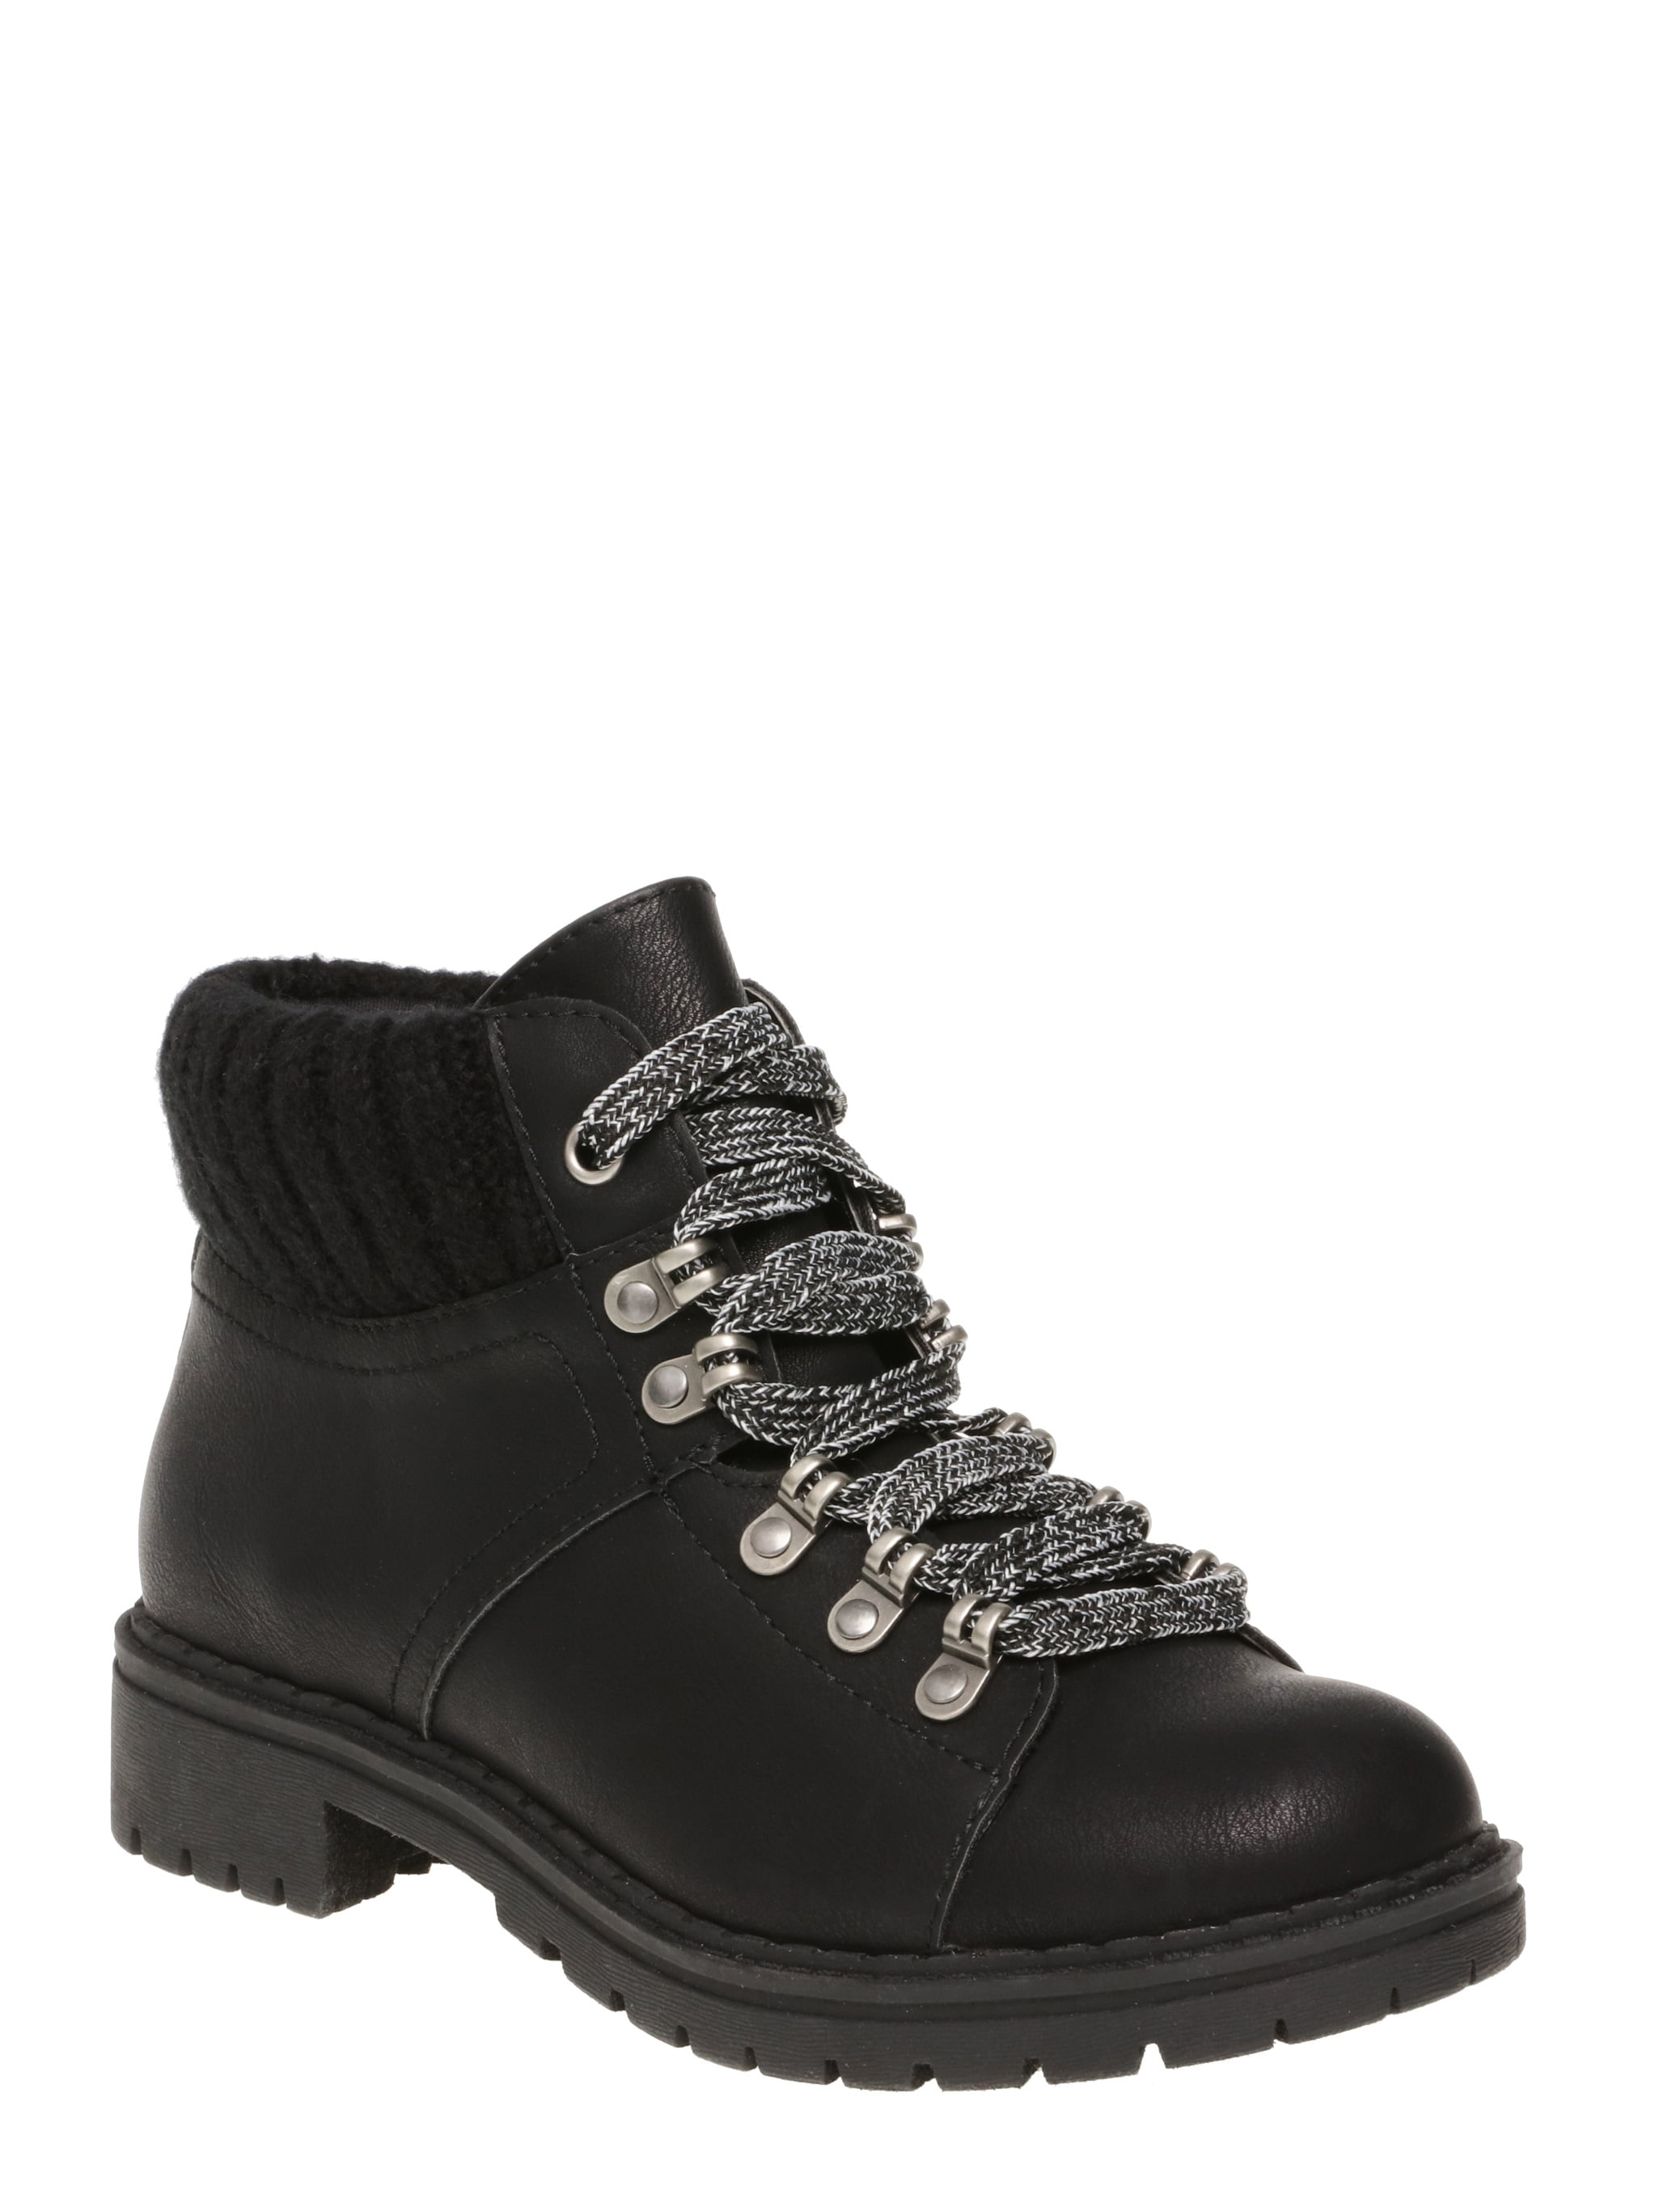 black hiker boots women's